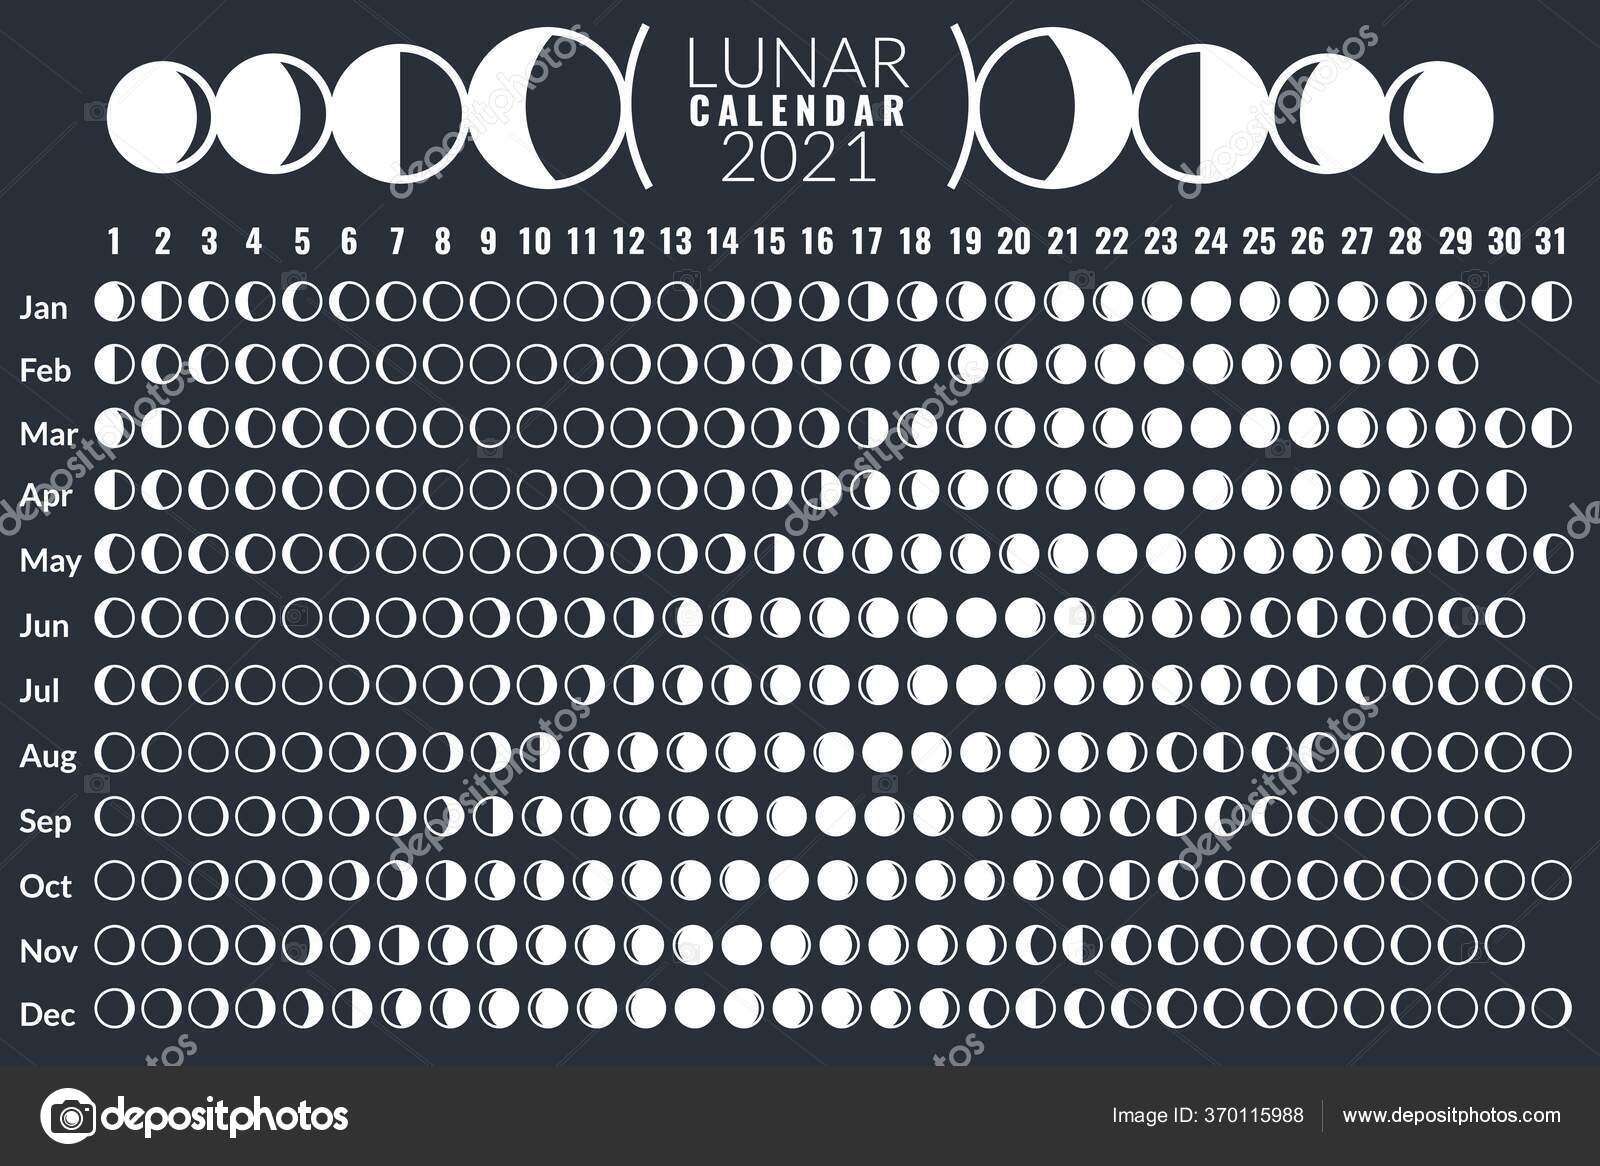 moon-calendar-lunar-phases-calendar-2021-poster-design-monthly-cycle-planner-astrology-moon